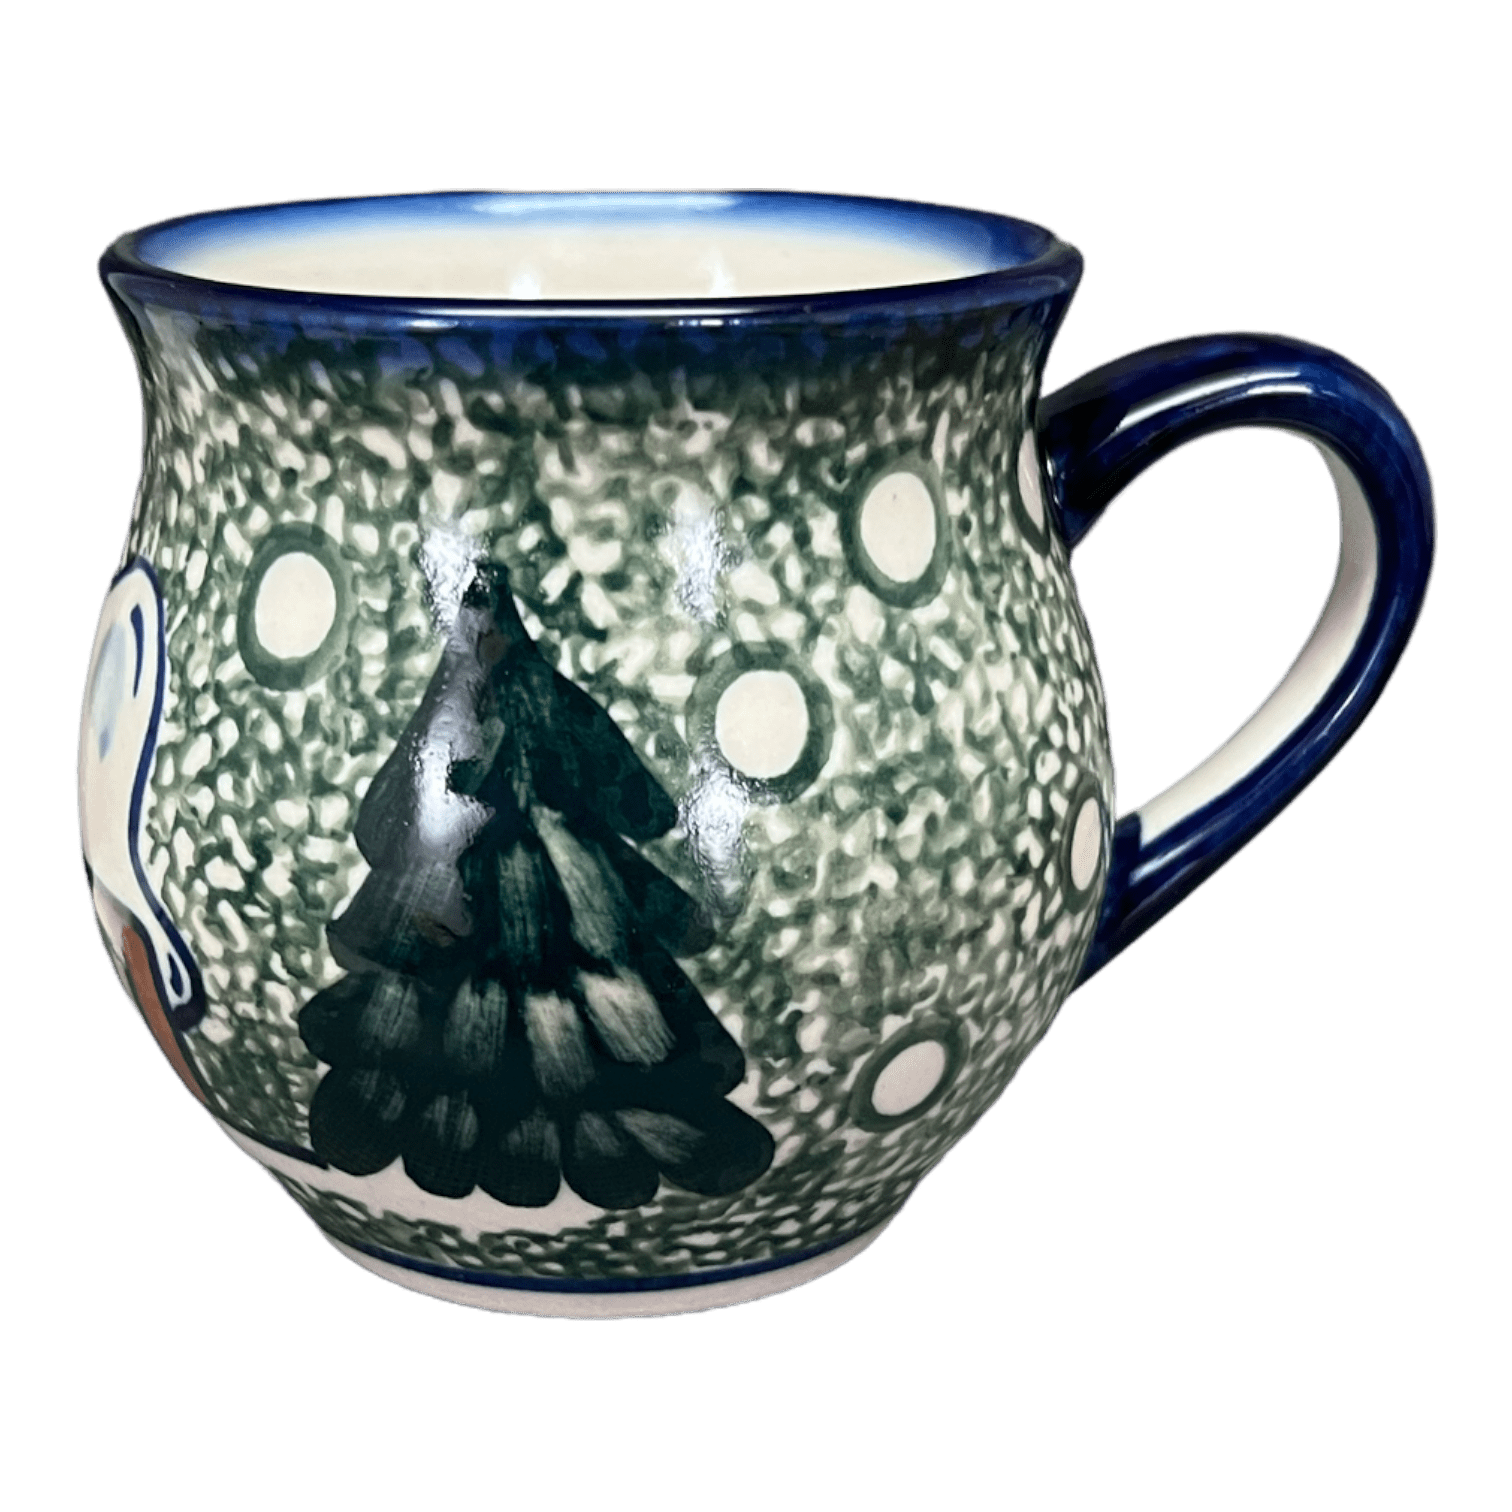 Handmade Ceramic Mug - Small Size